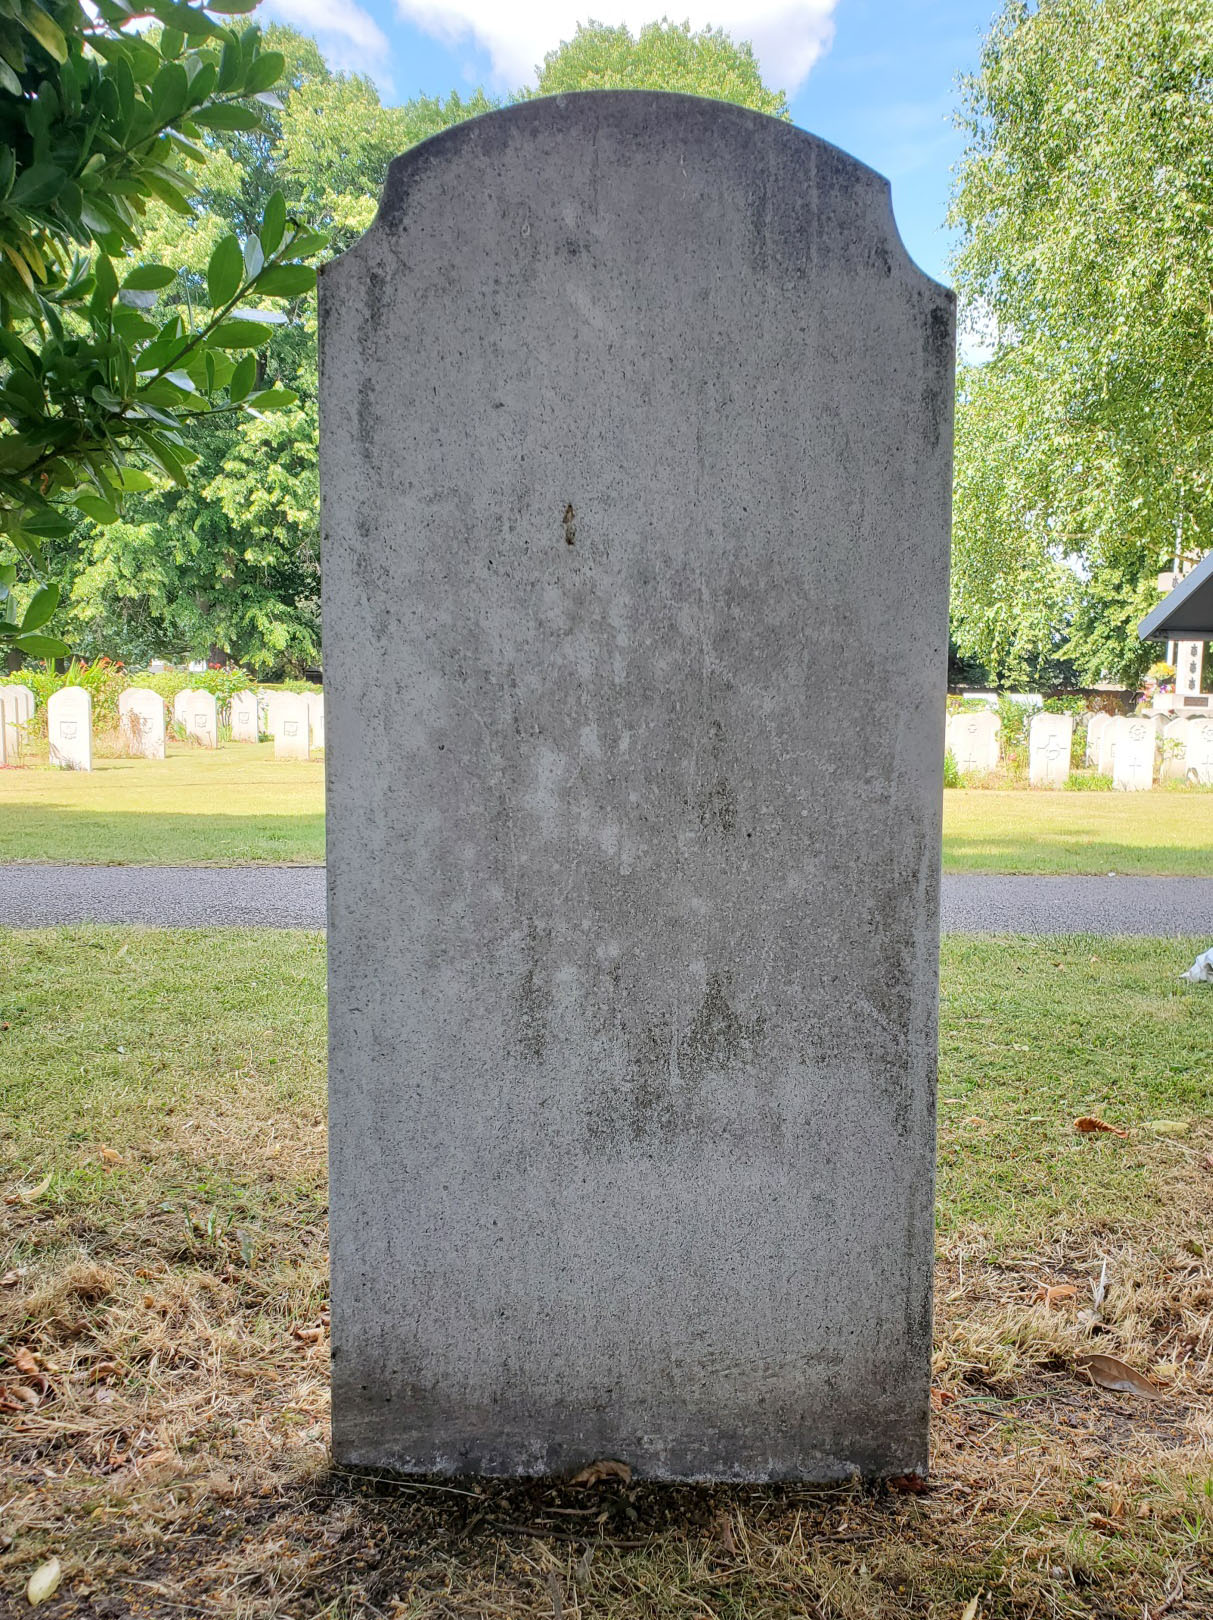 Tombstone of Bohdan Vronsky